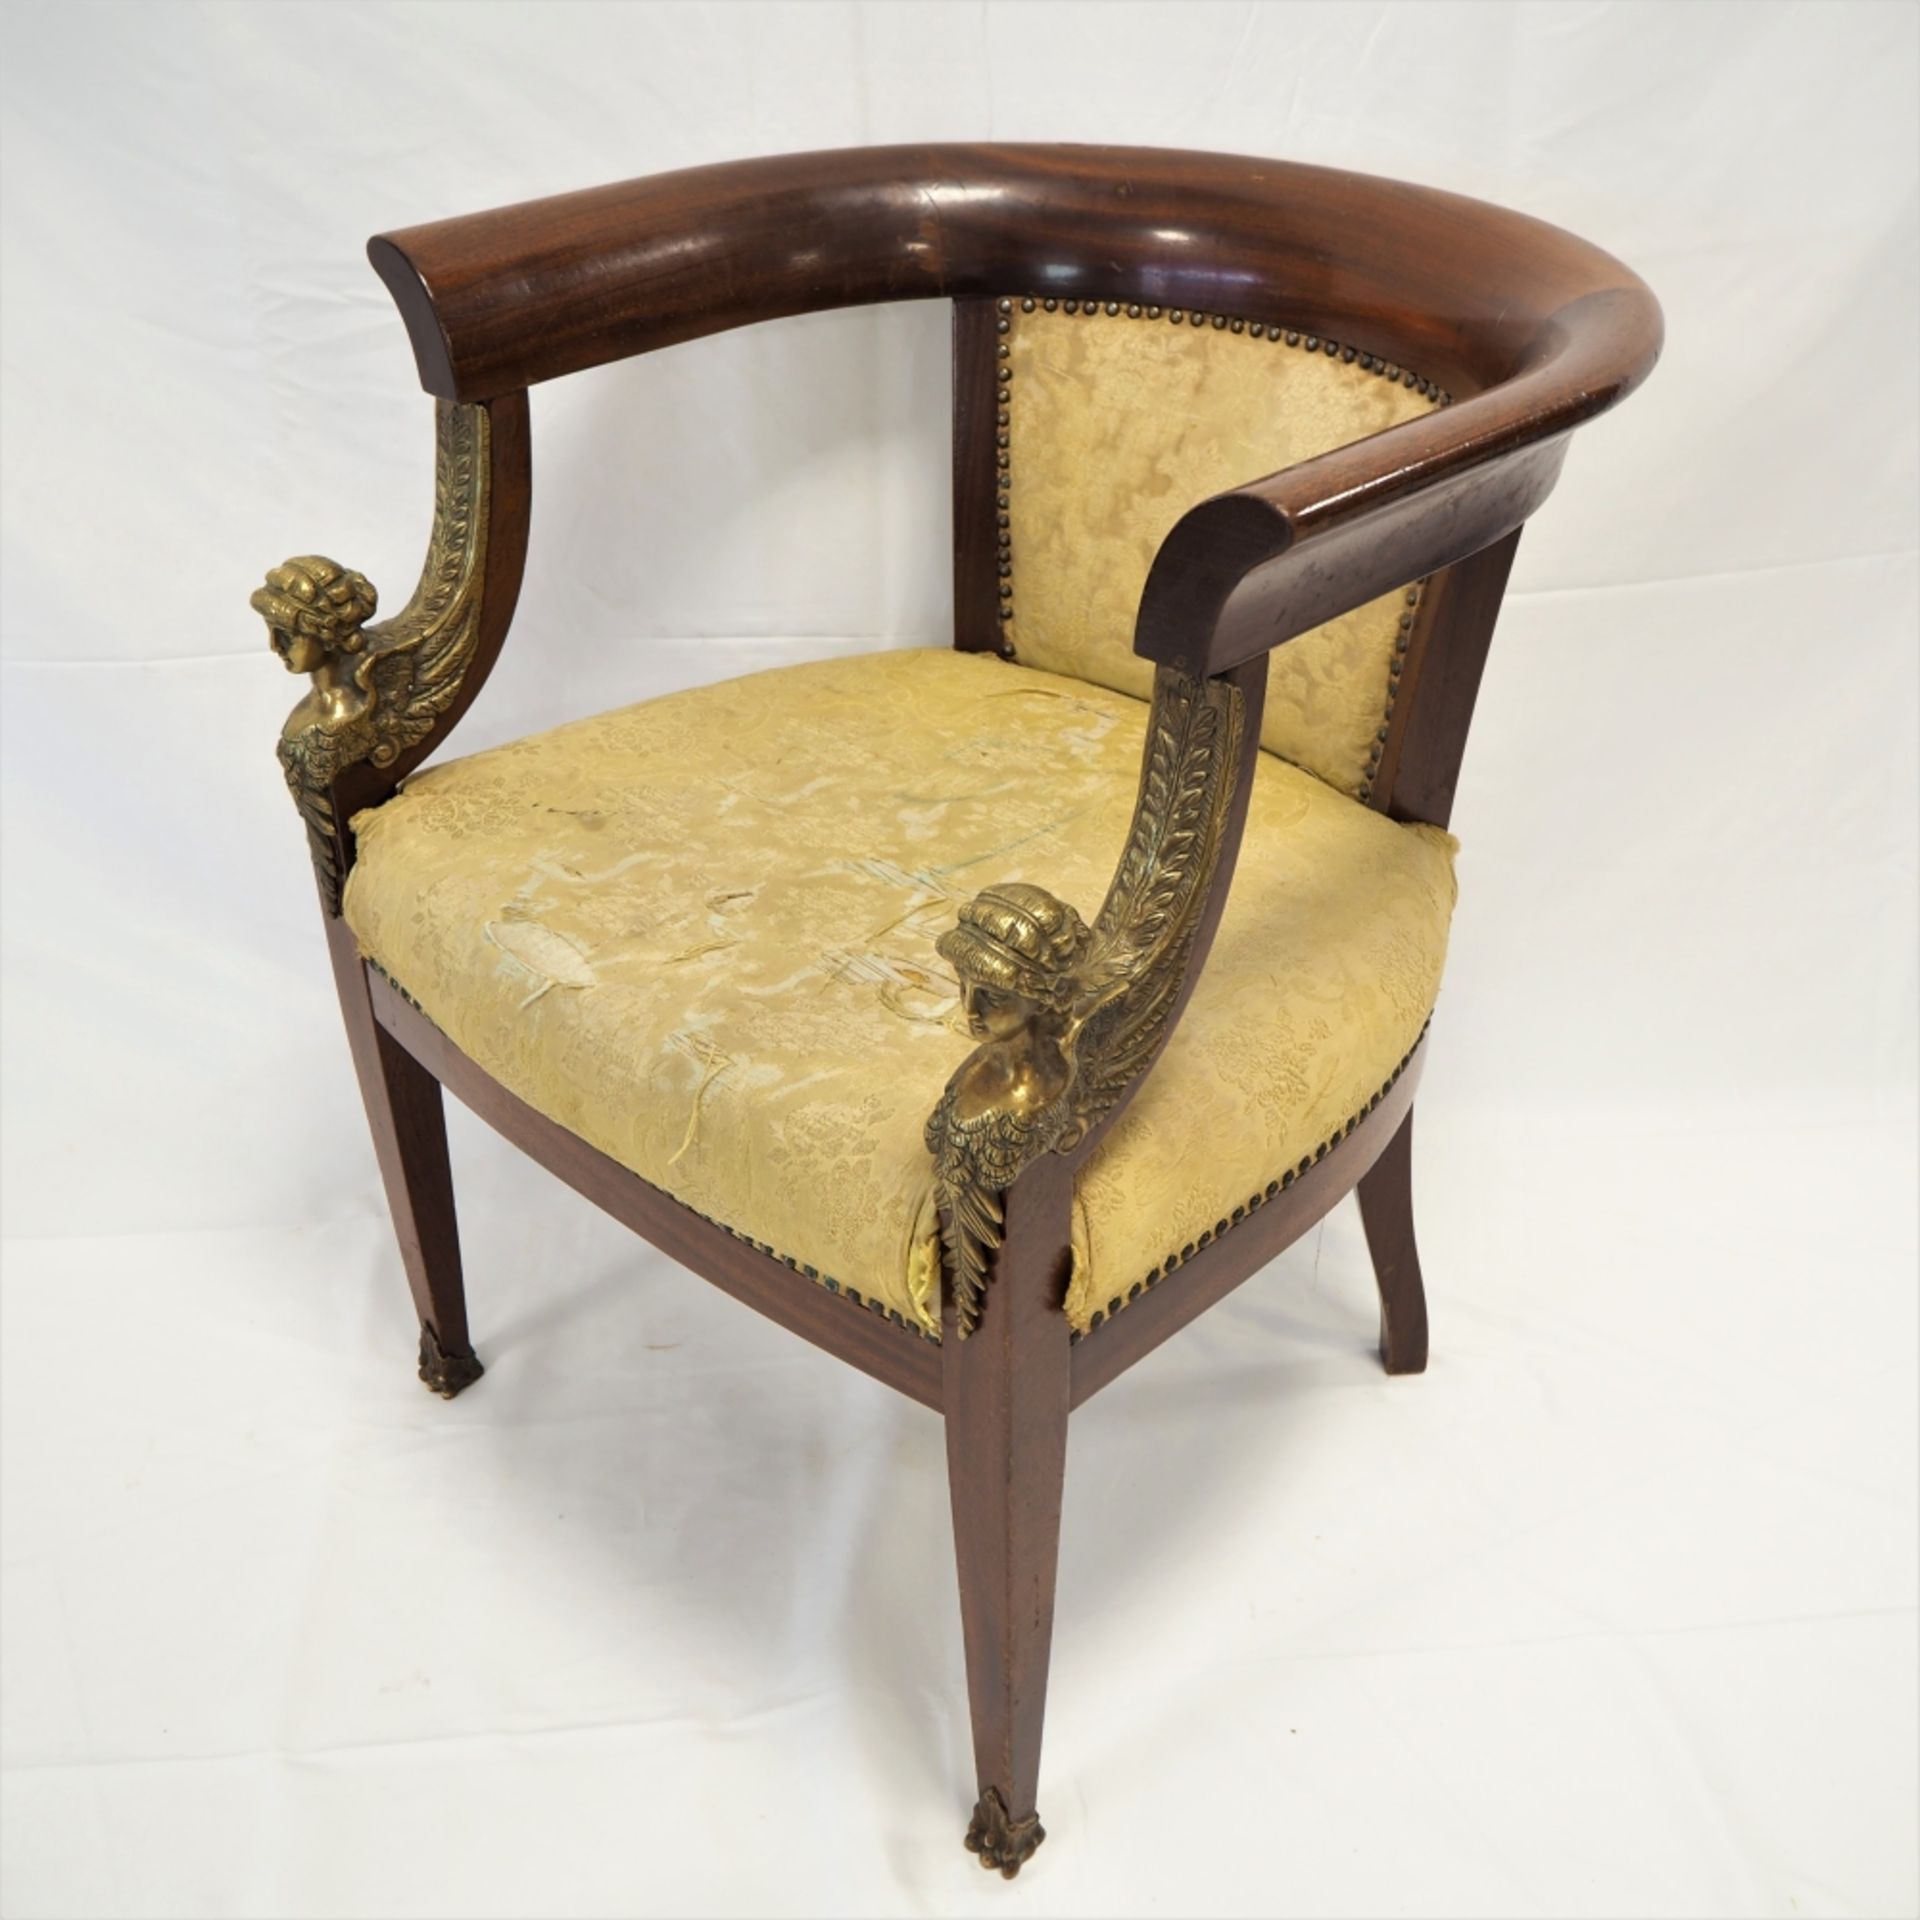 Empire armchair - around 1890 - in original condition